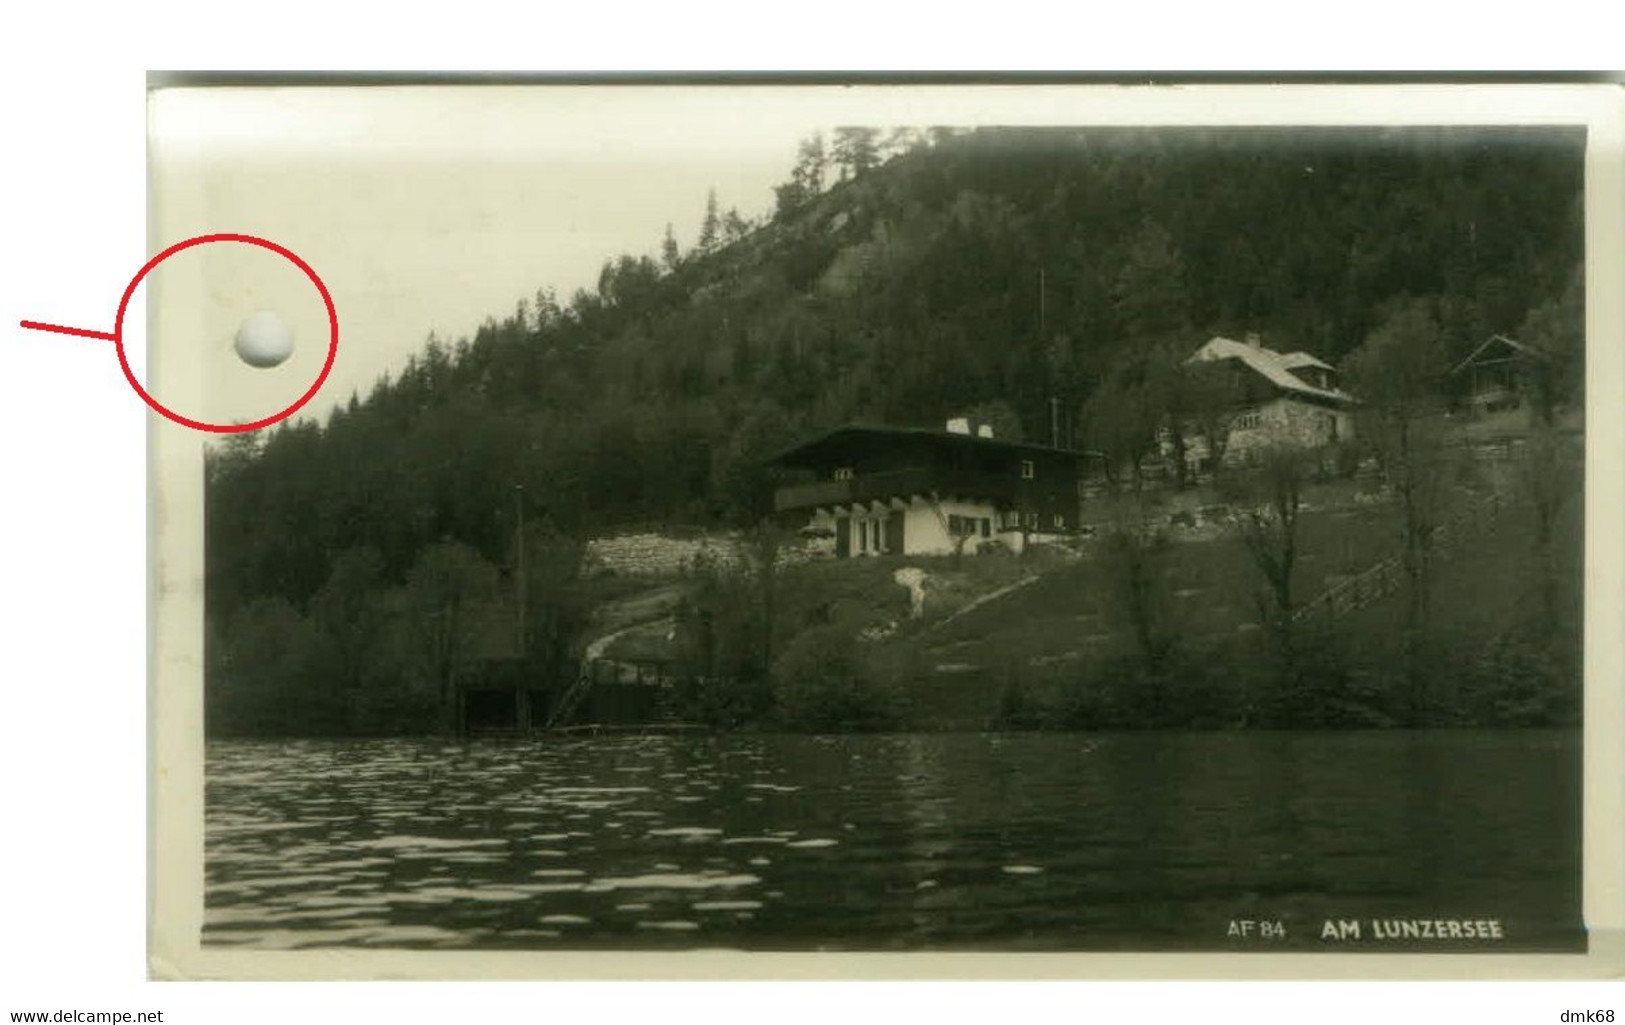 AK AUSTRIA -  LUNZ AM SEE - PHOTO J. KUSS - RPPC POSTCARD 1930s (12142) - Lunz Am See